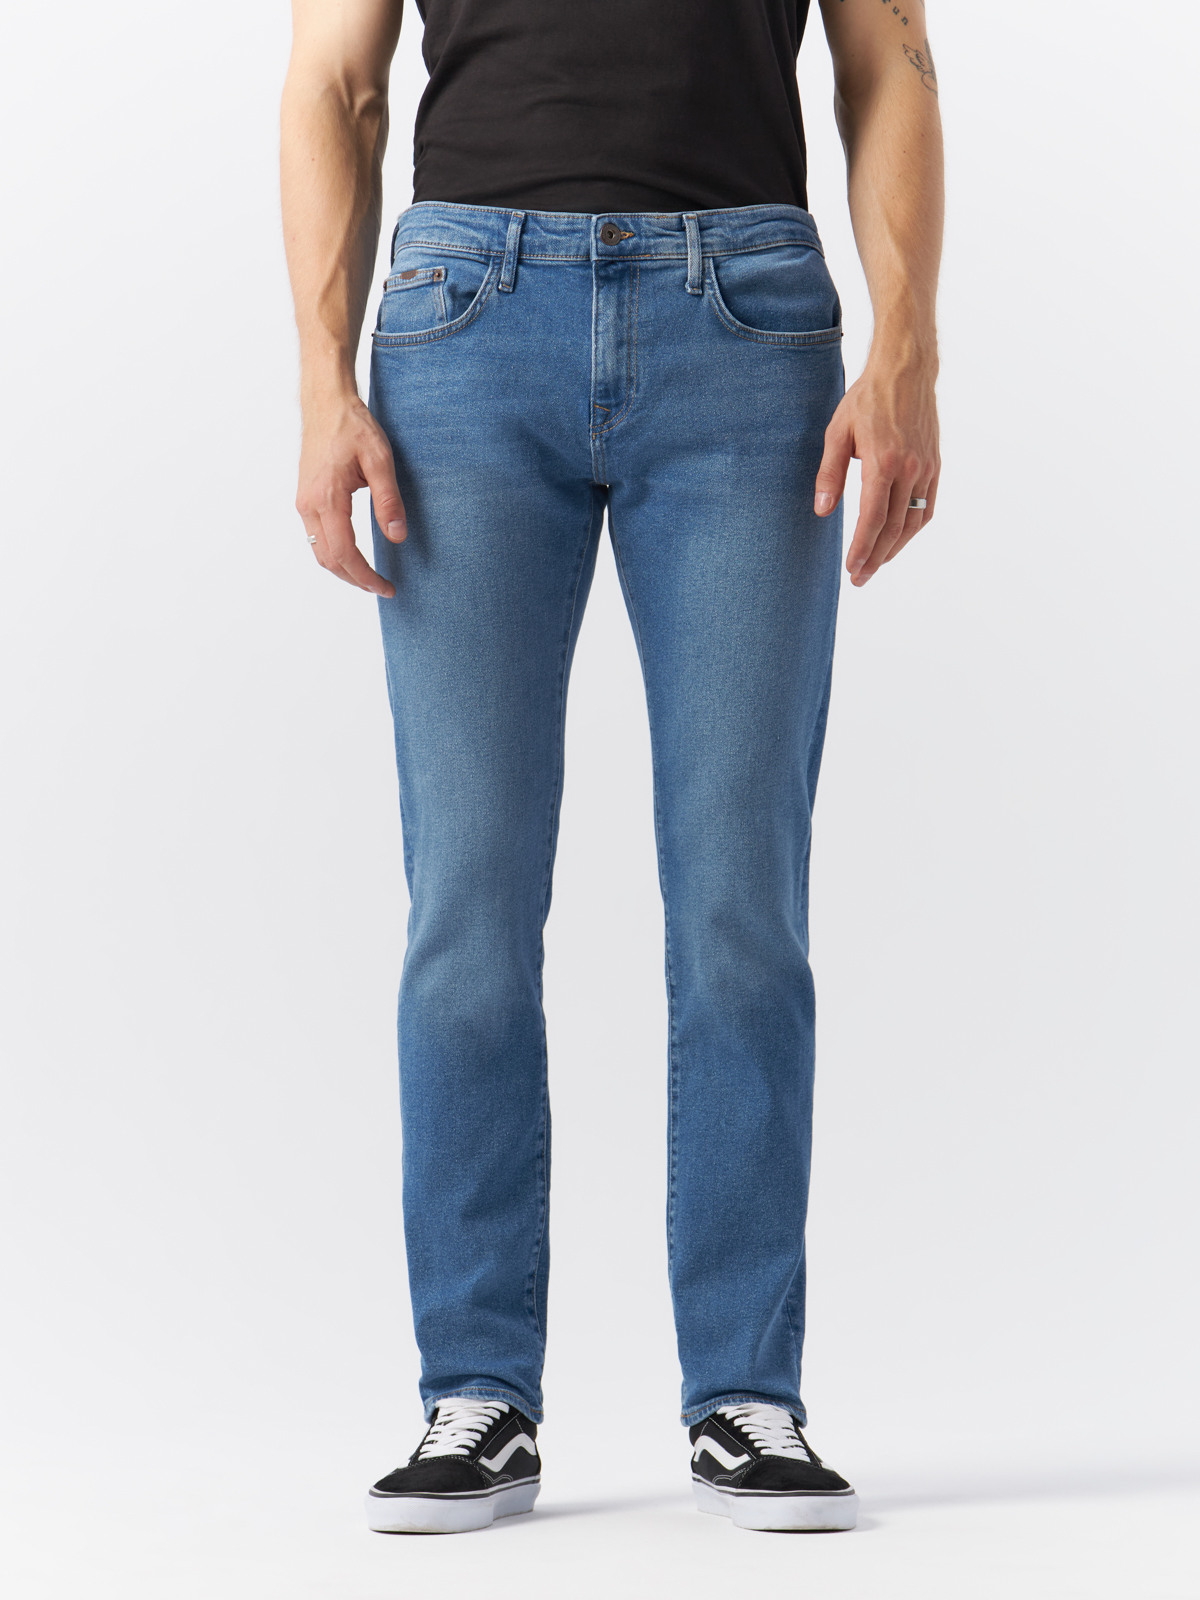 Джинсы Cross Jeans для мужчин, F 152-134, размер 30-32, синие